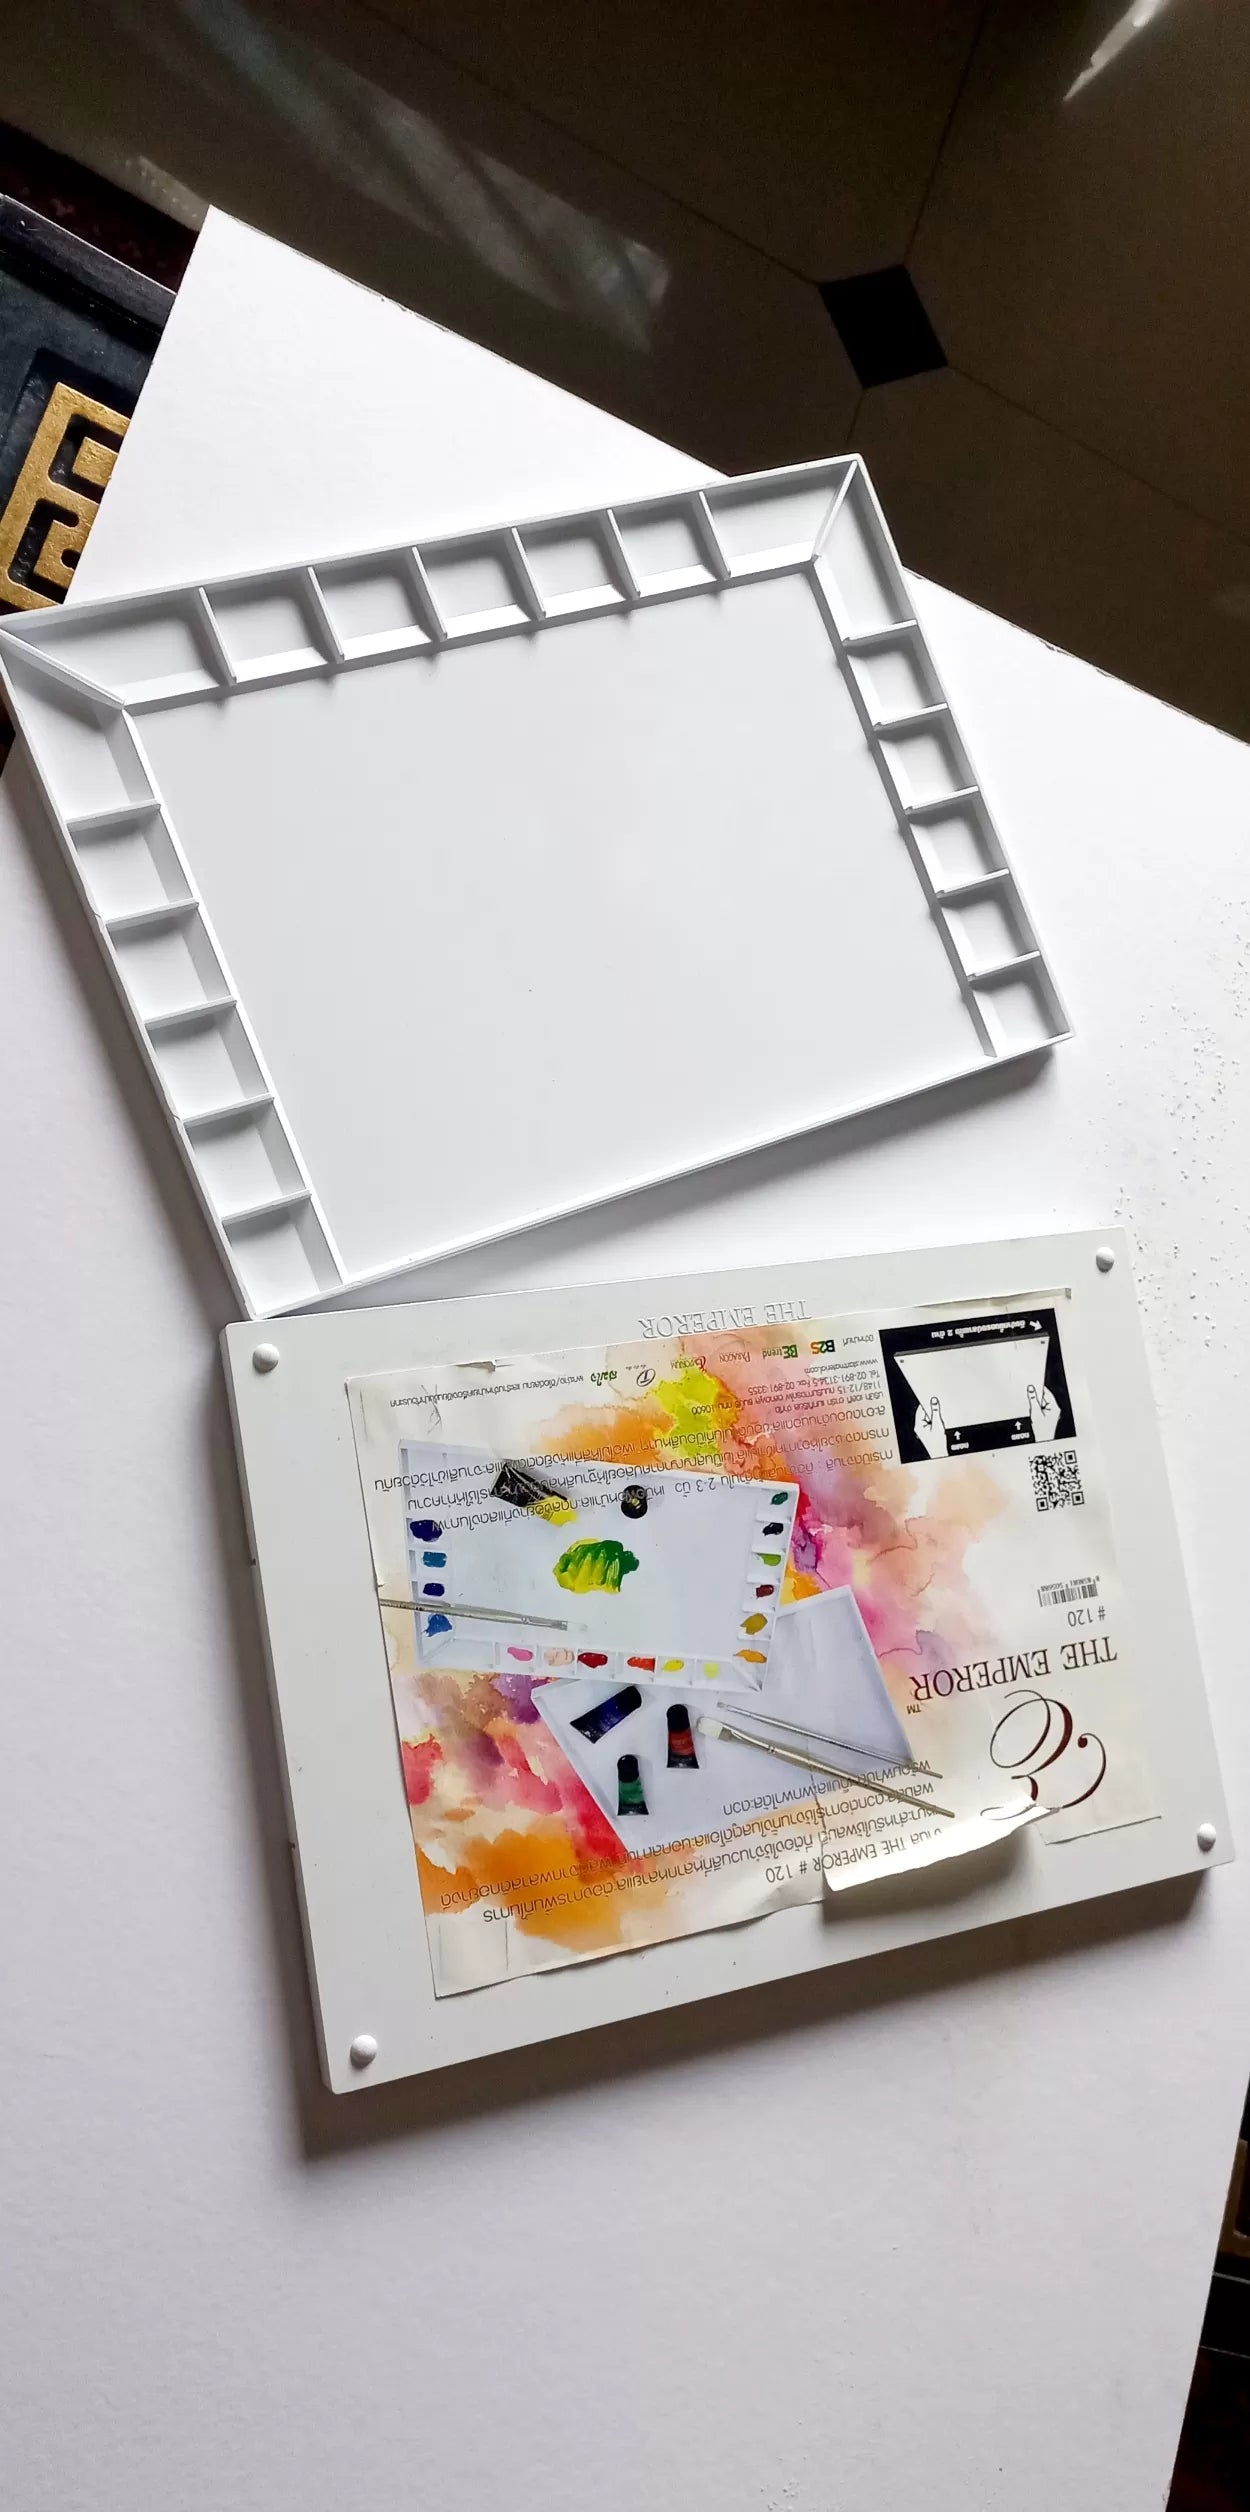 ST Emperor Plastic Mold Palette – Artist Quality